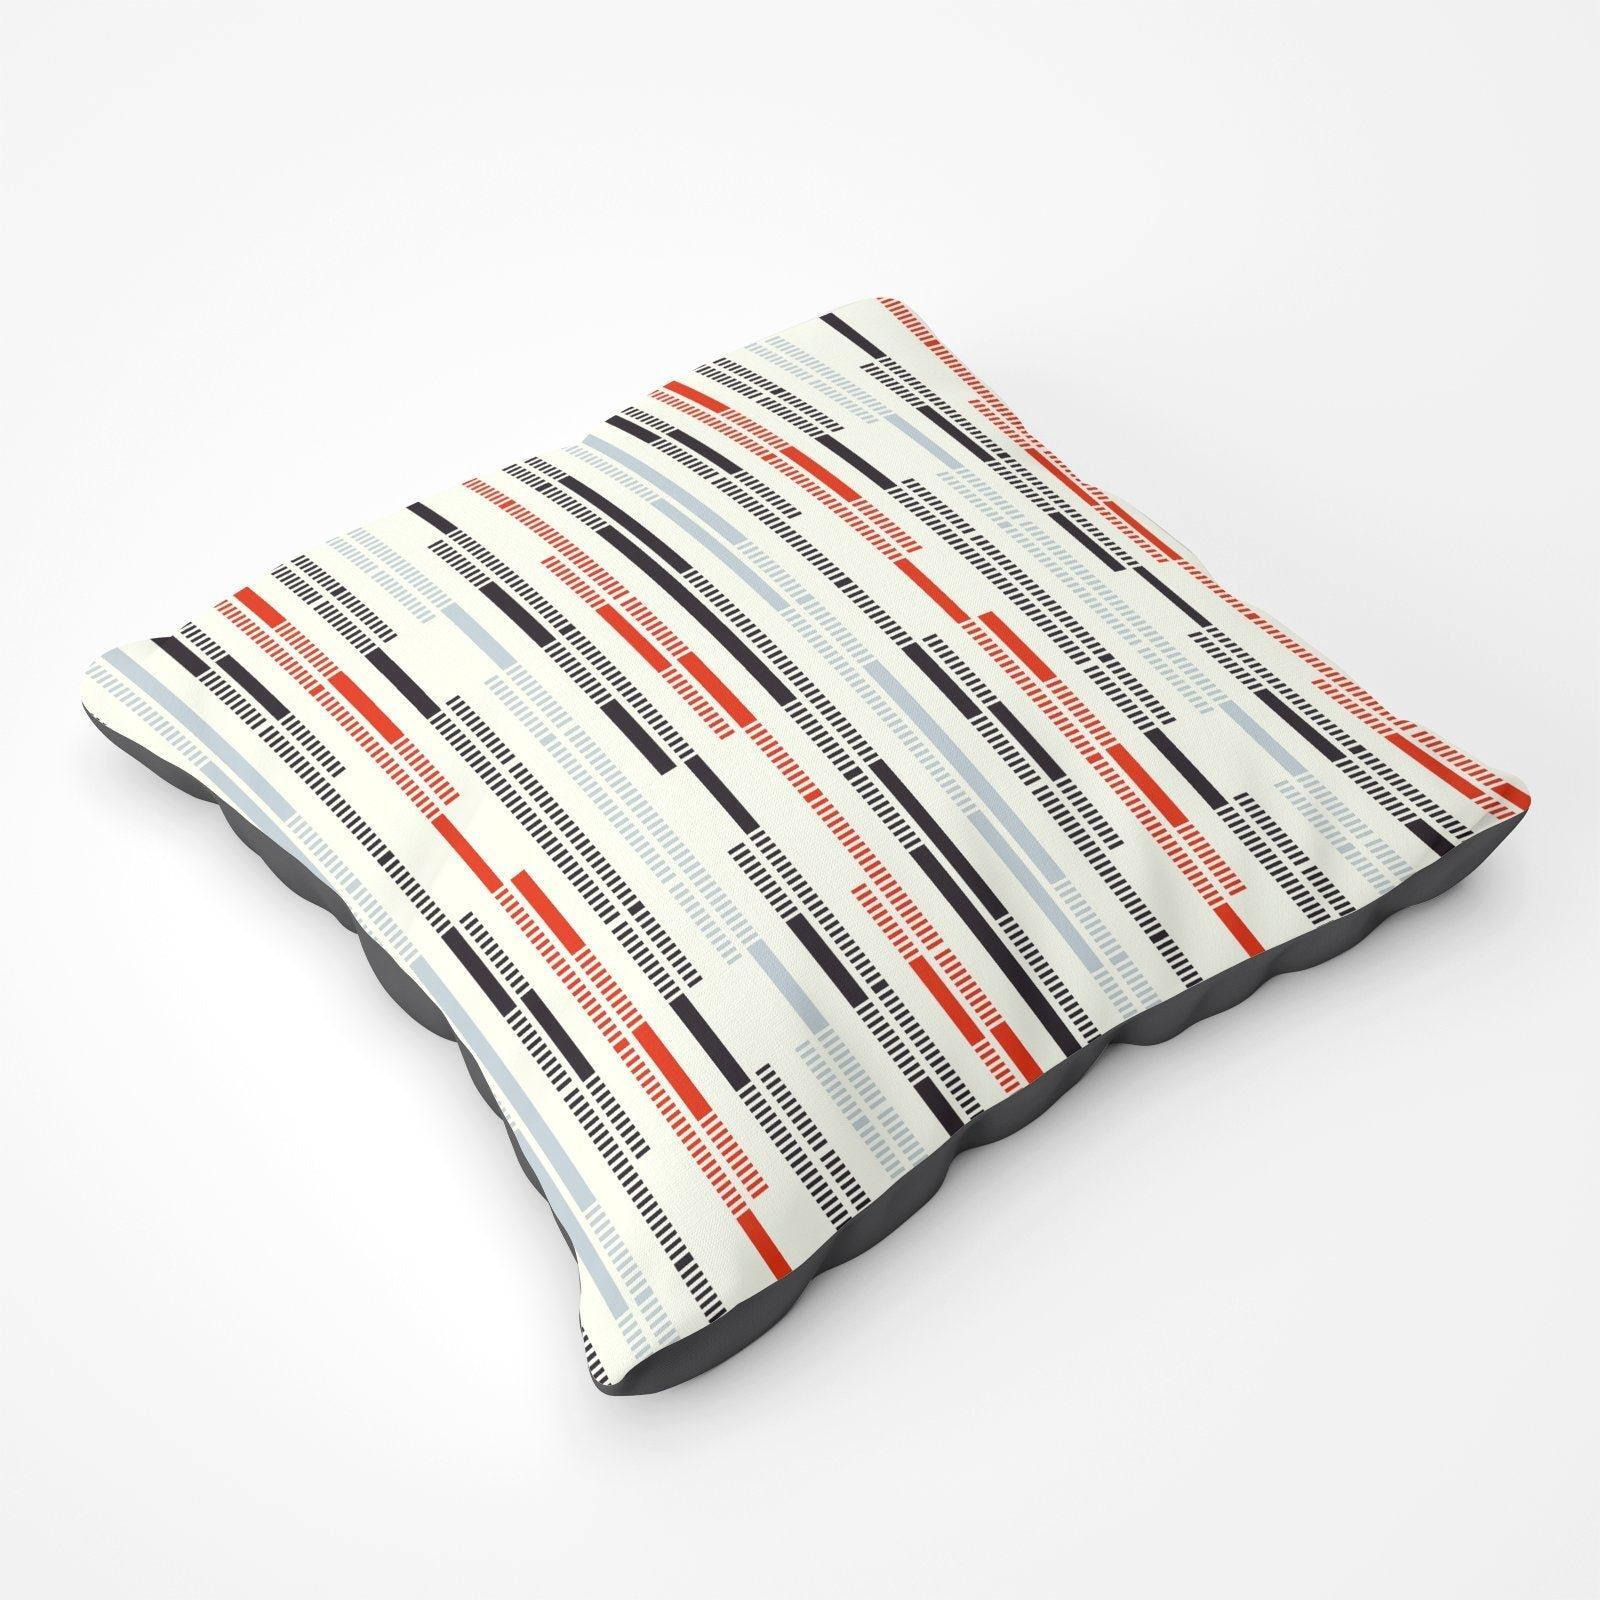 Dashed Stroke Pattern Floor Cushion - image 1